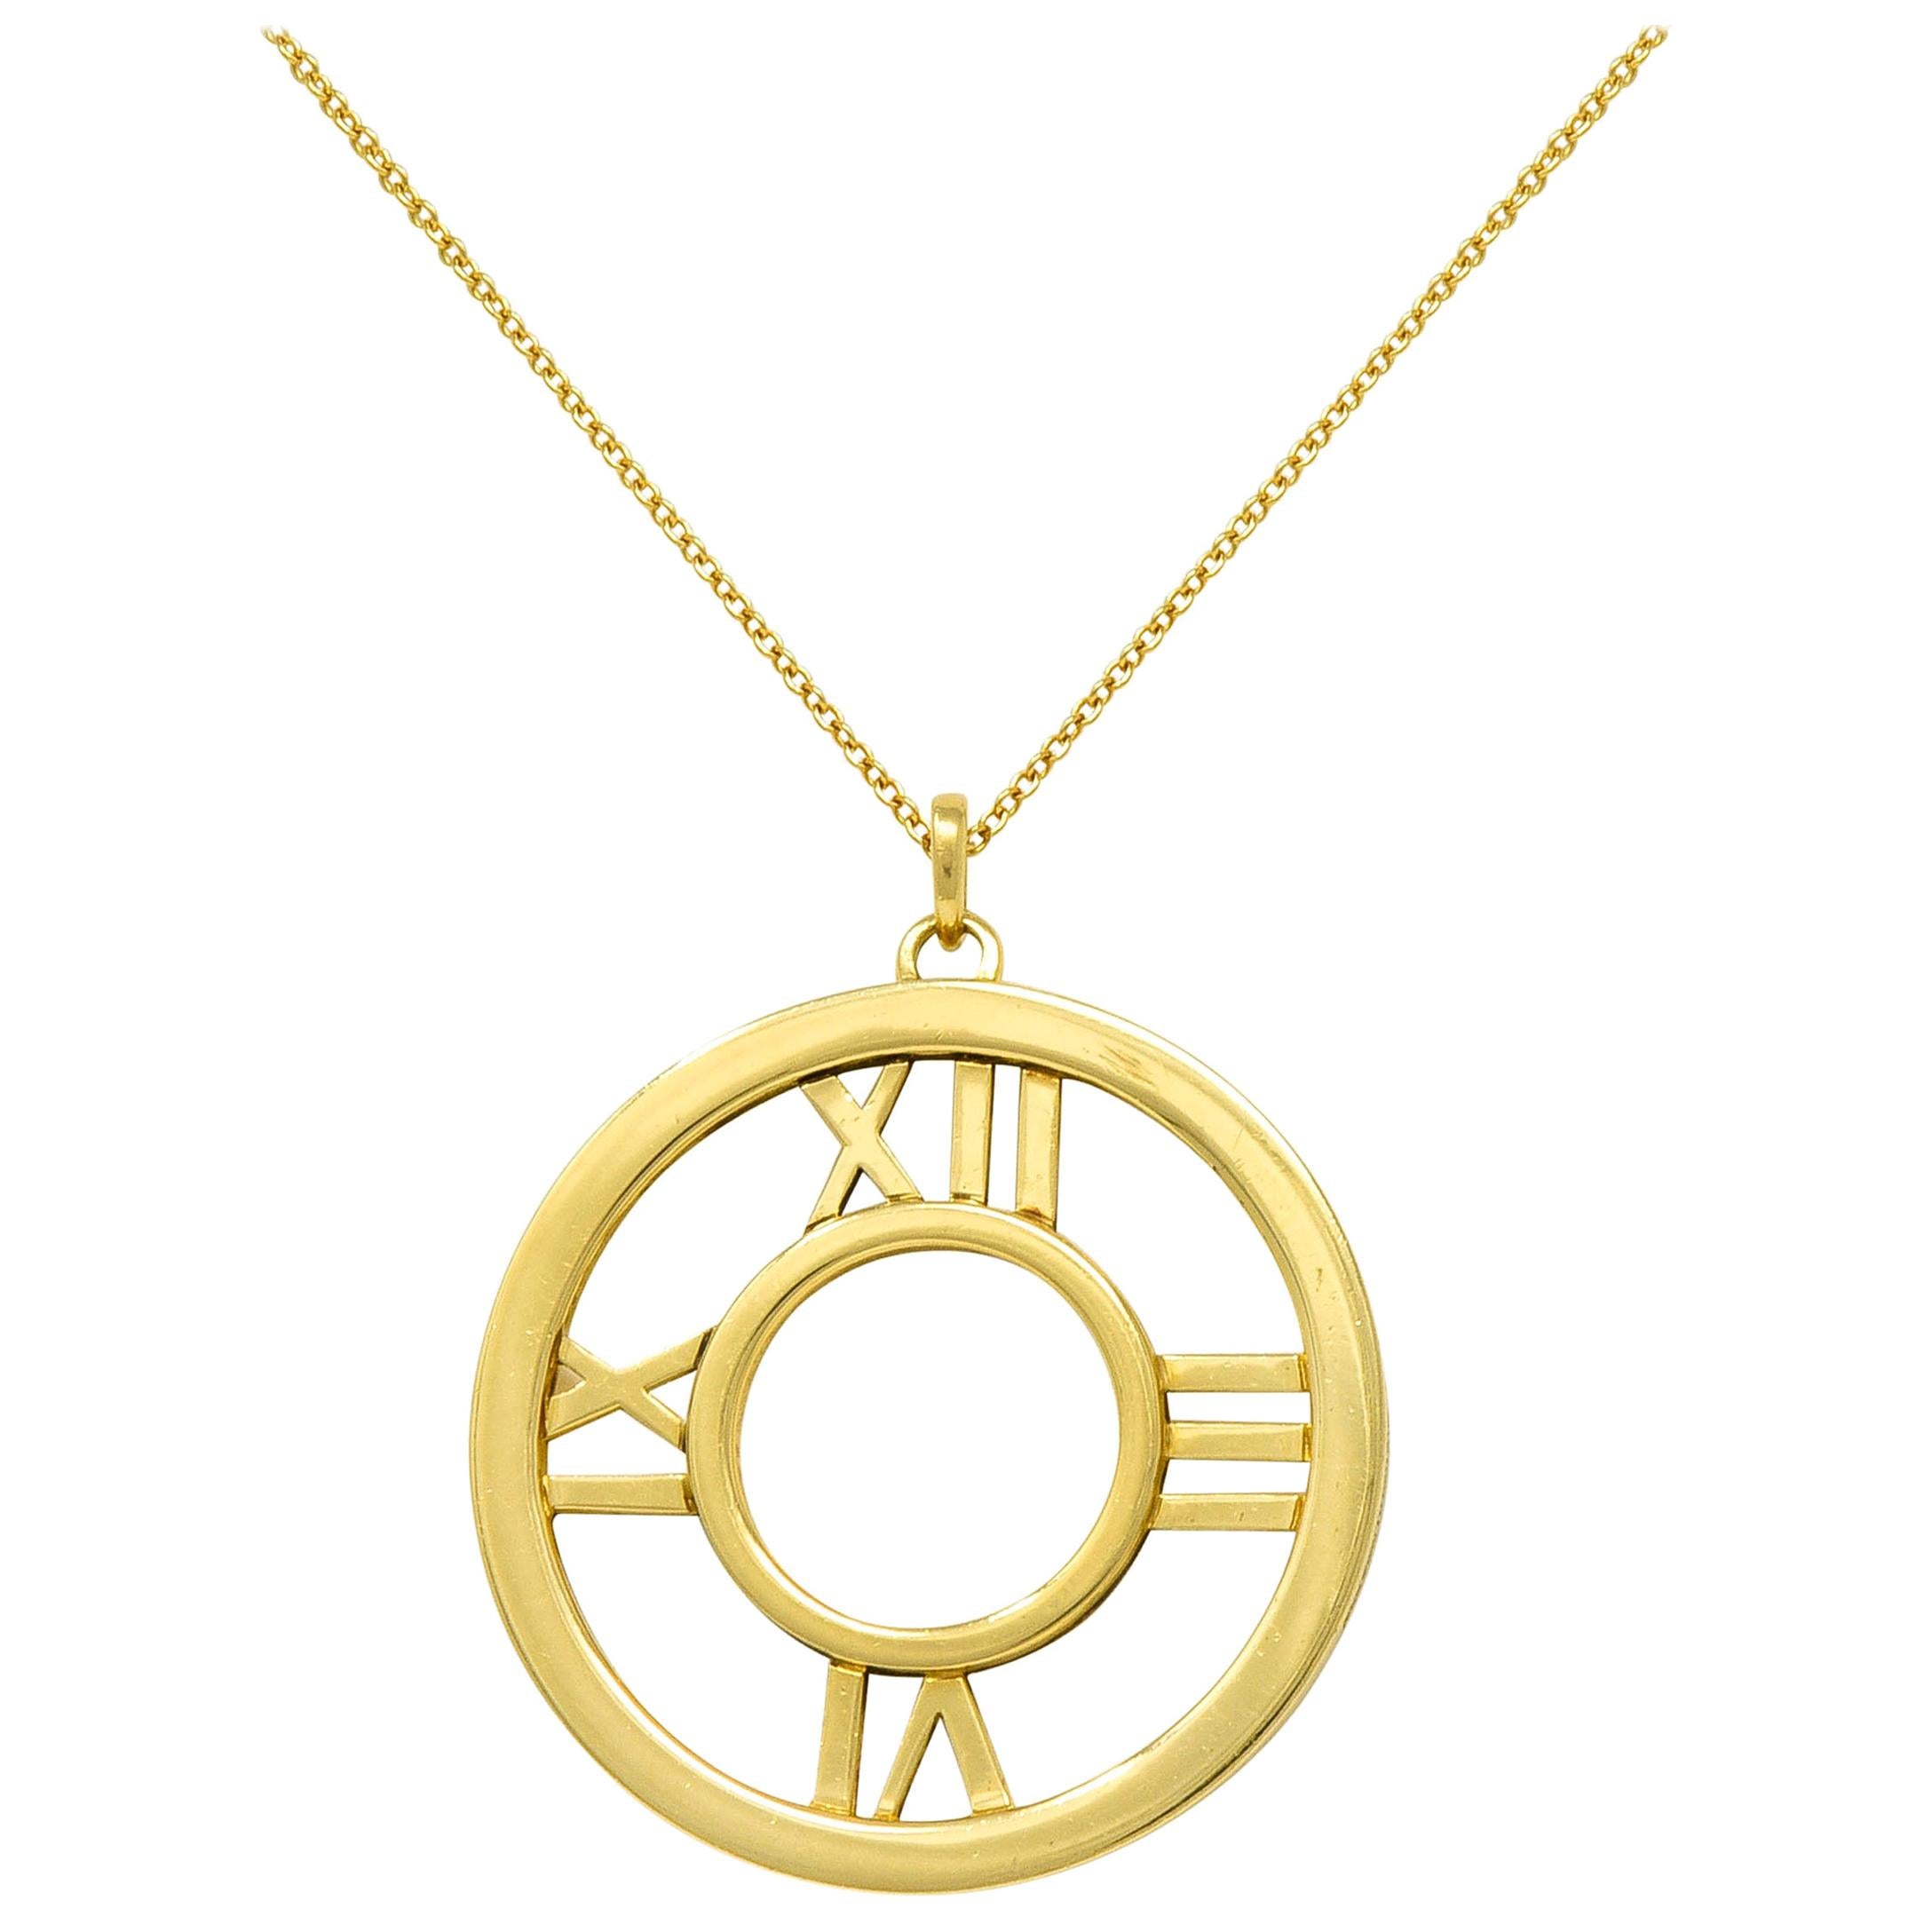 2003 Tiffany & Co. 18 Karat Gold Circular Atlas Pendant Necklace